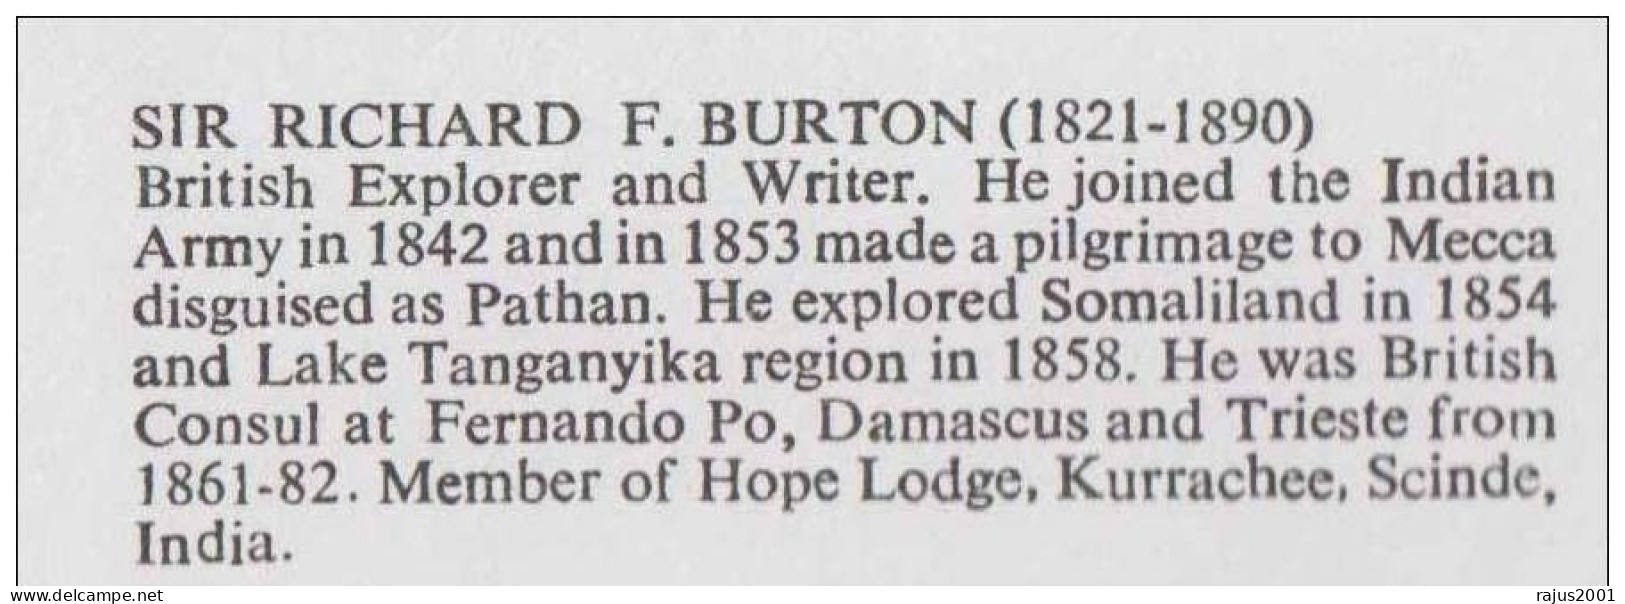 Richard F Burton Explorer Made Pilgrimage To Mecca Disguise As Pathan, Member Of Hope Lodge Kurrachee / Karachi, Masonic - Francmasonería